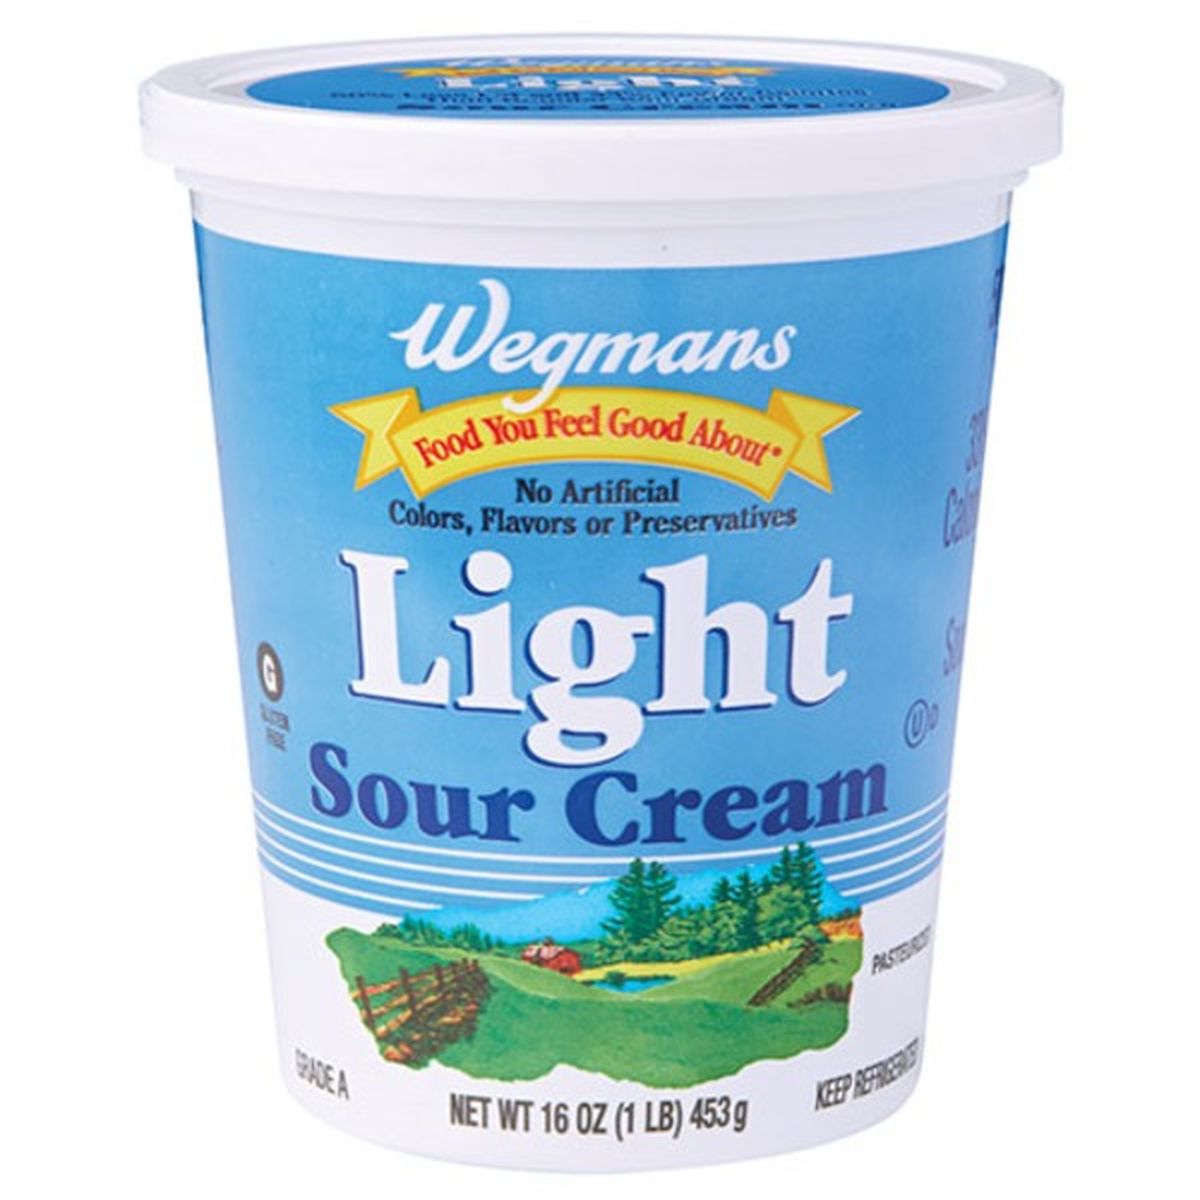 Calories in Wegmans Light Sour Cream